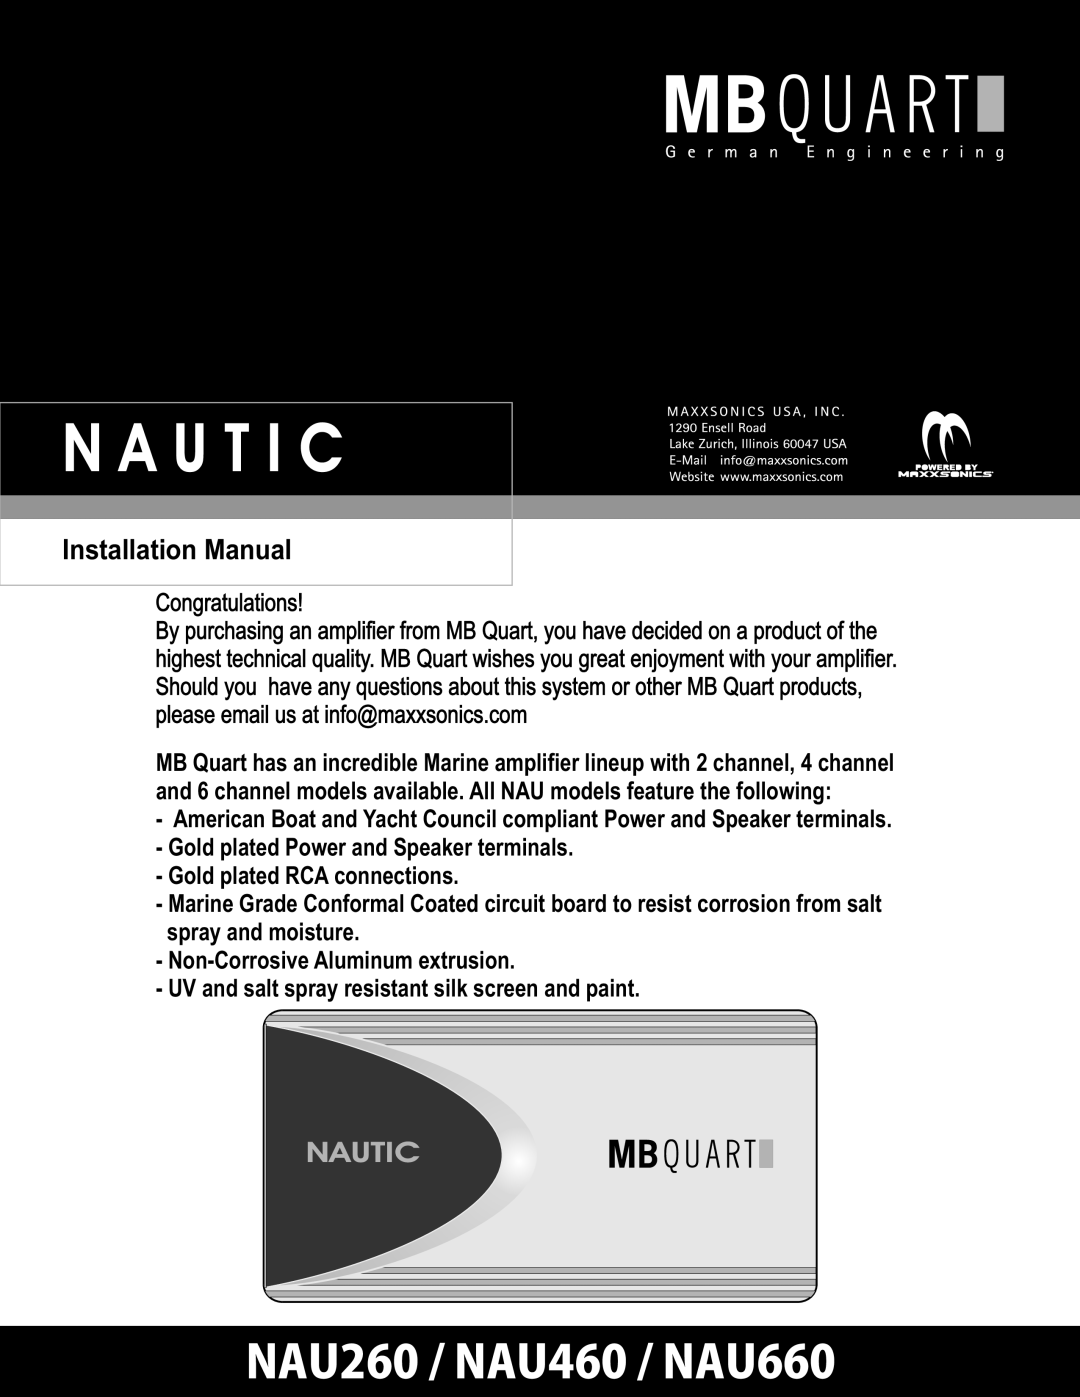 MB QUART installation manual Installation Manual, Nautic, N A U T I C, NAU260 / NAU460 / NAU660 